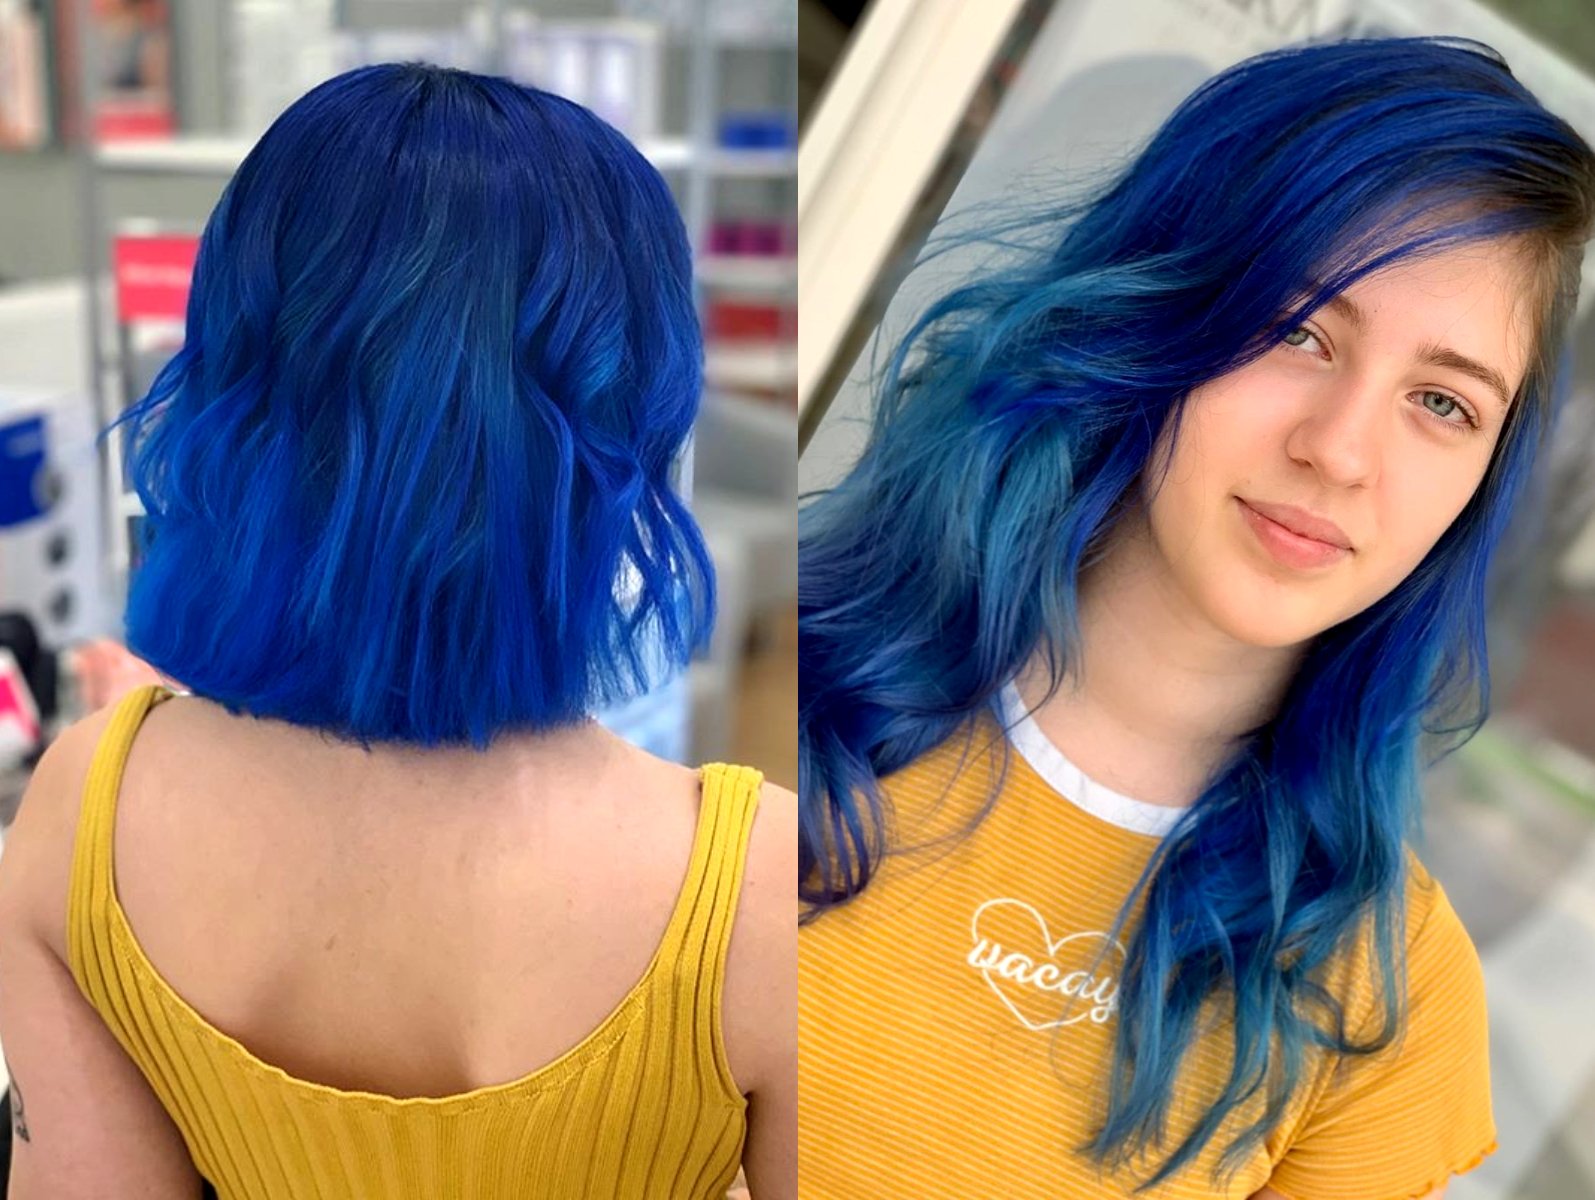 Dark blue hair balayage inspiration from celebrities - wide 2